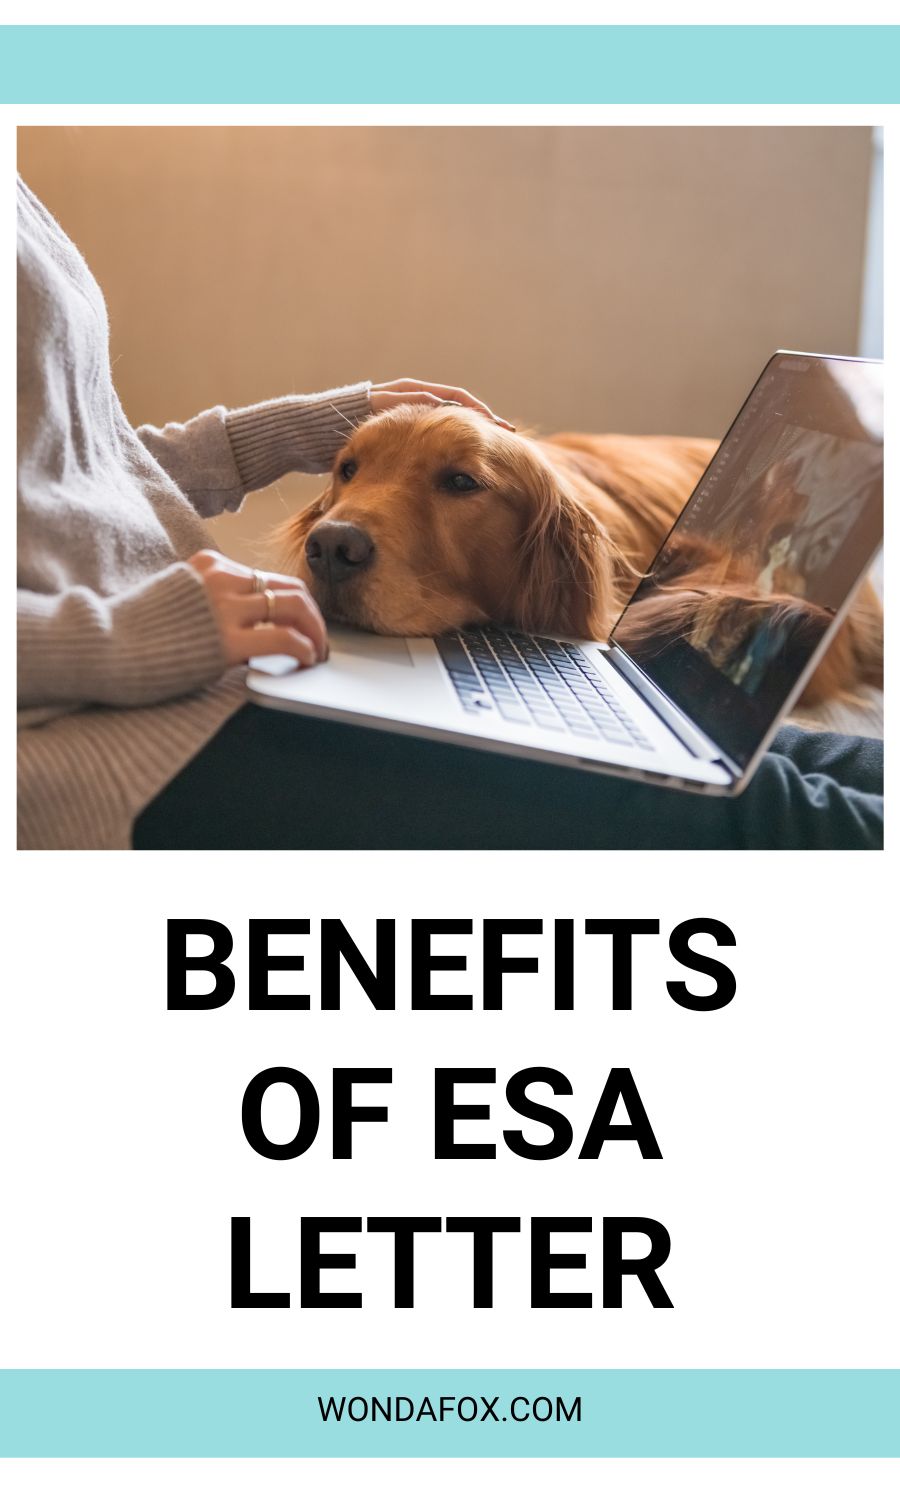 Benefits of ESA letter